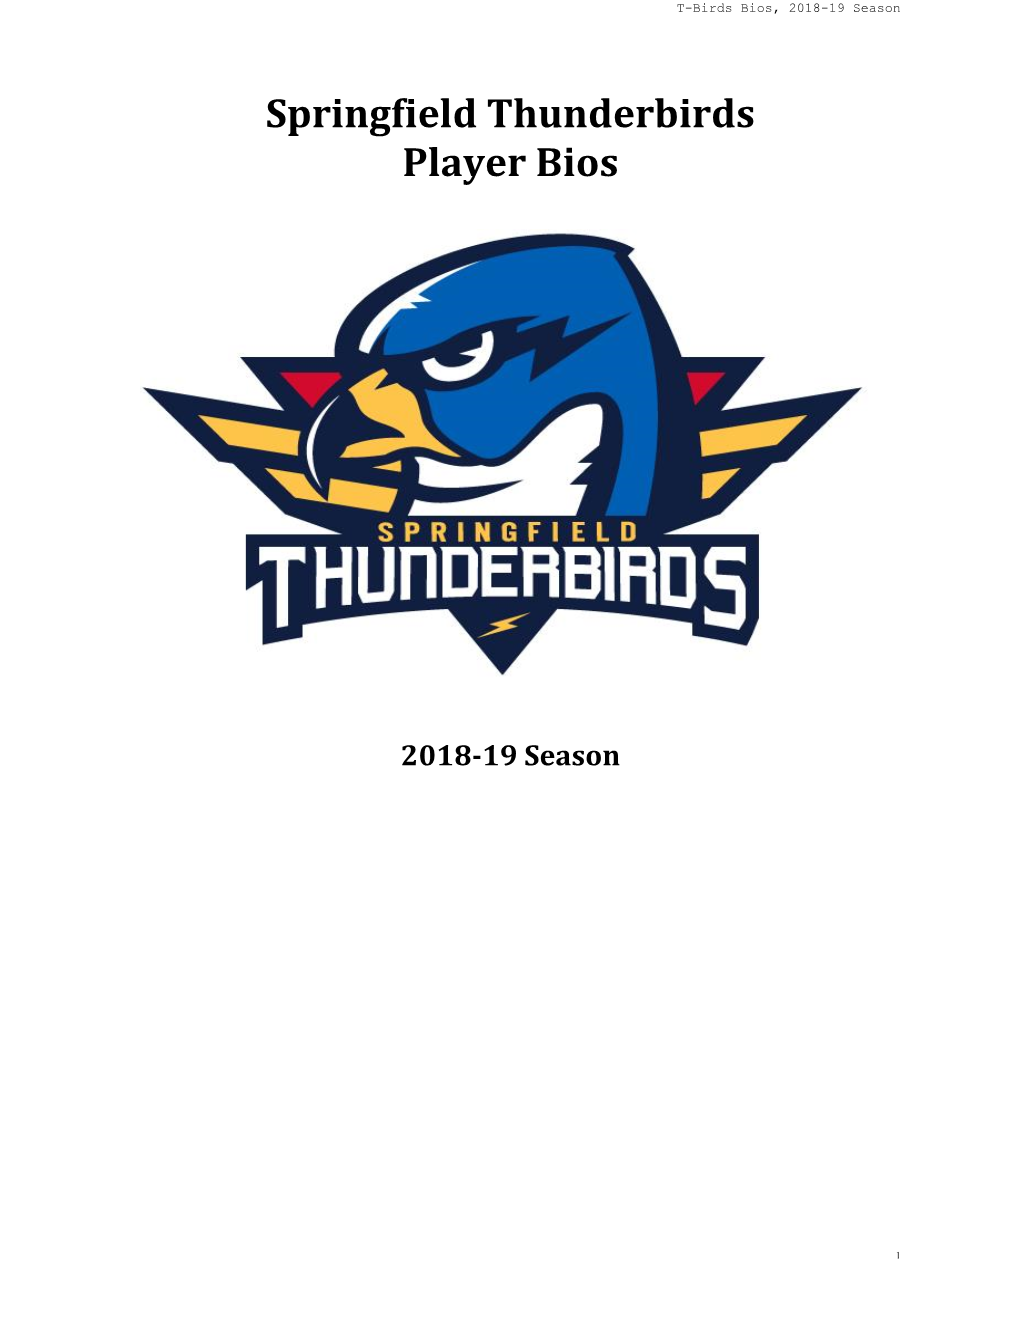 Springfield Thunderbirds Player Bios